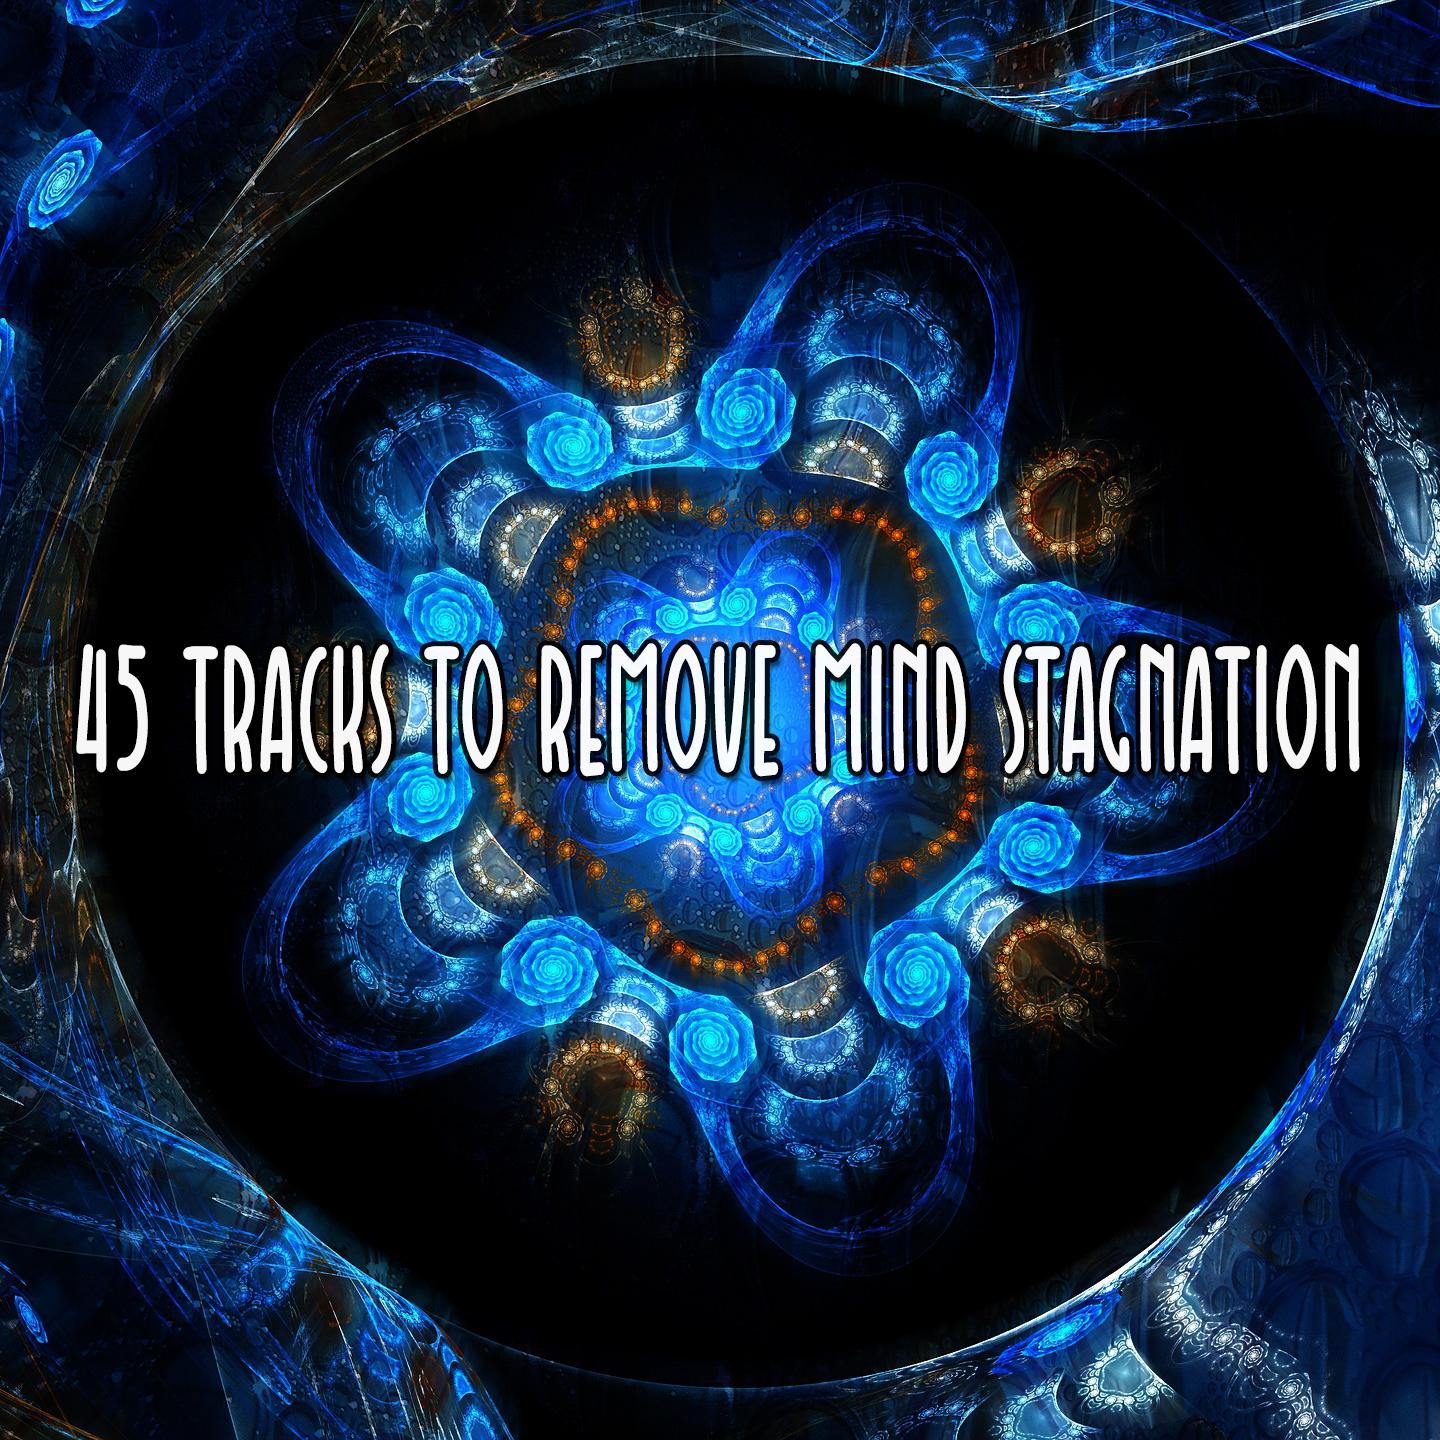 45 Tracks to Remove Mind Stagnation